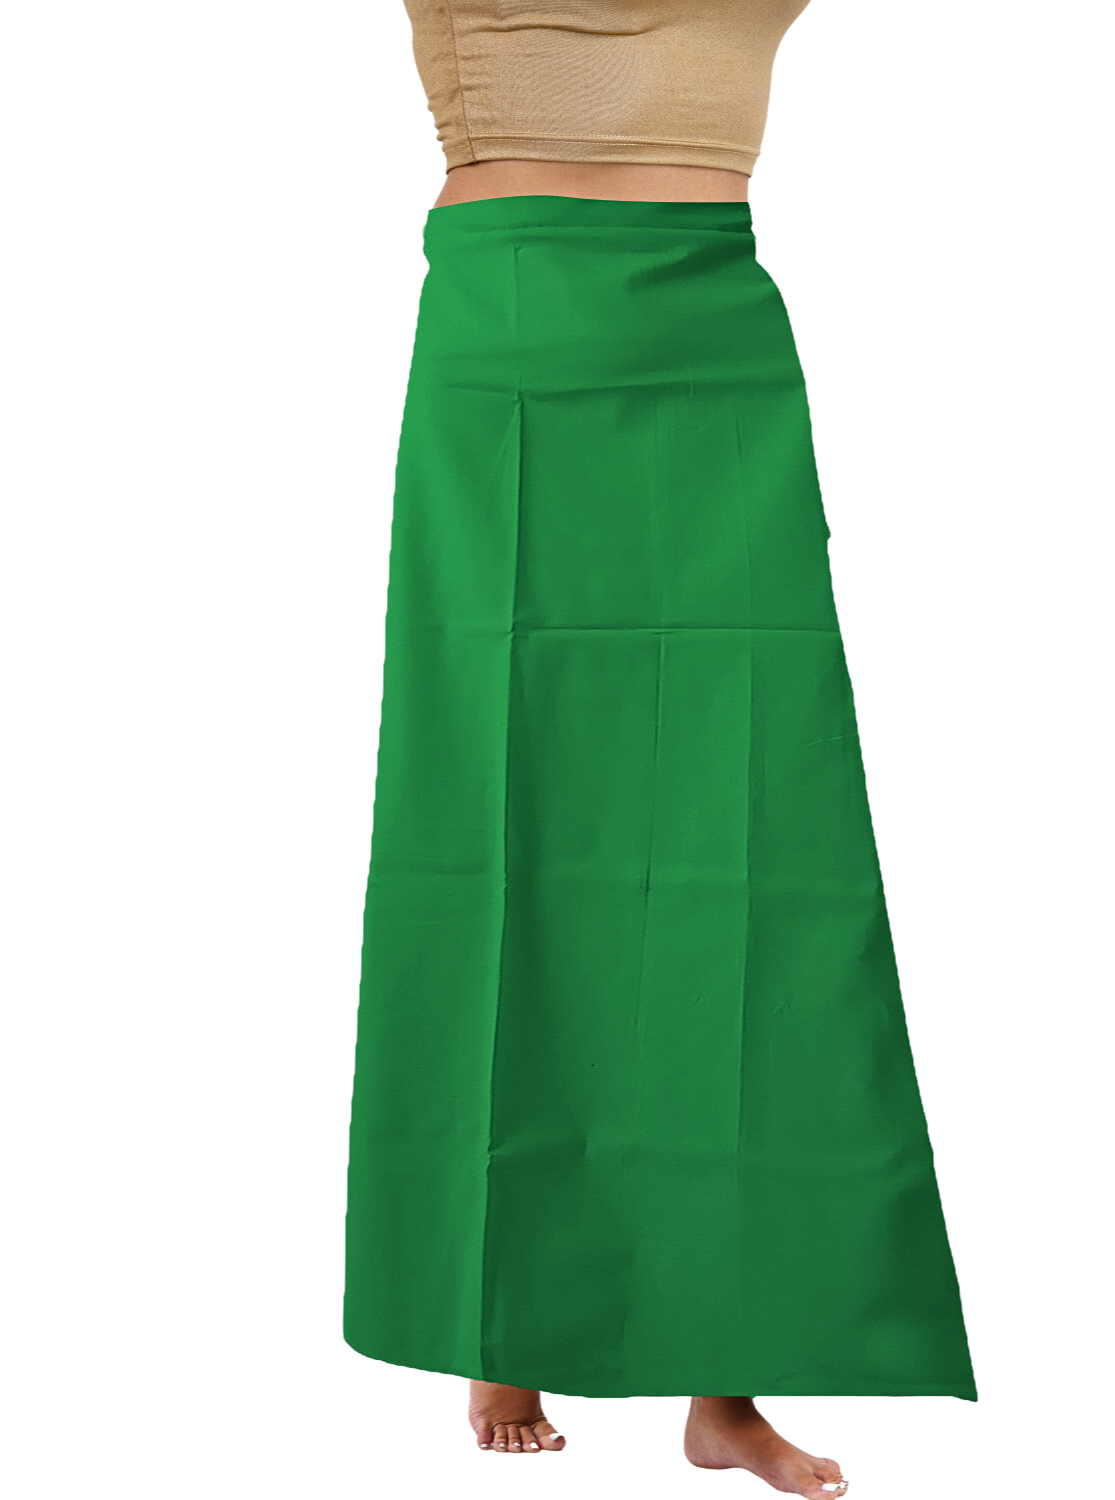 New Arrivals MANGAI Superior Cotton Petticoats - 7 Part Premium Embroidery Petticoats